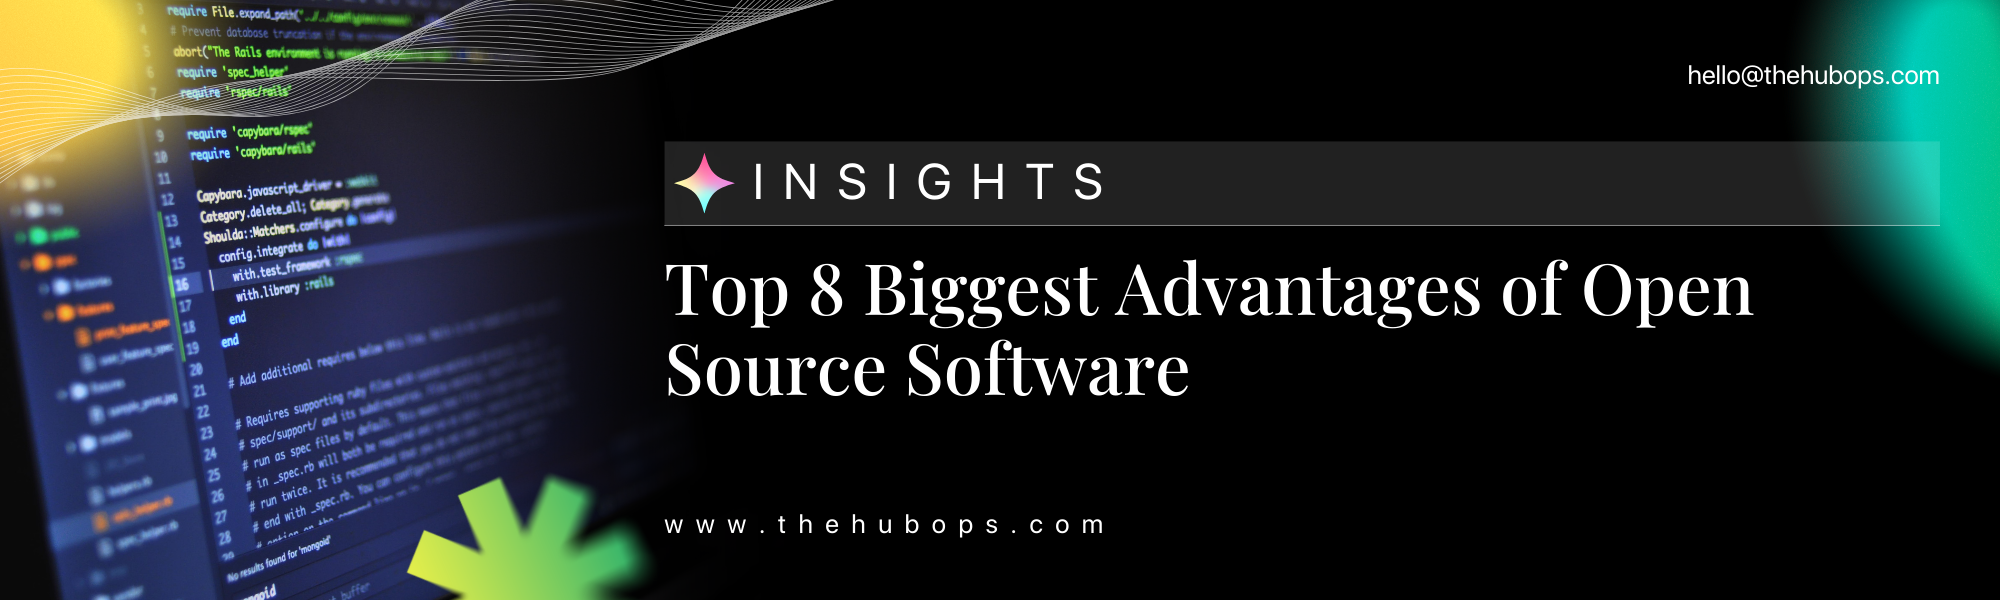 Top 8 Biggest Advantages of Open Source Software